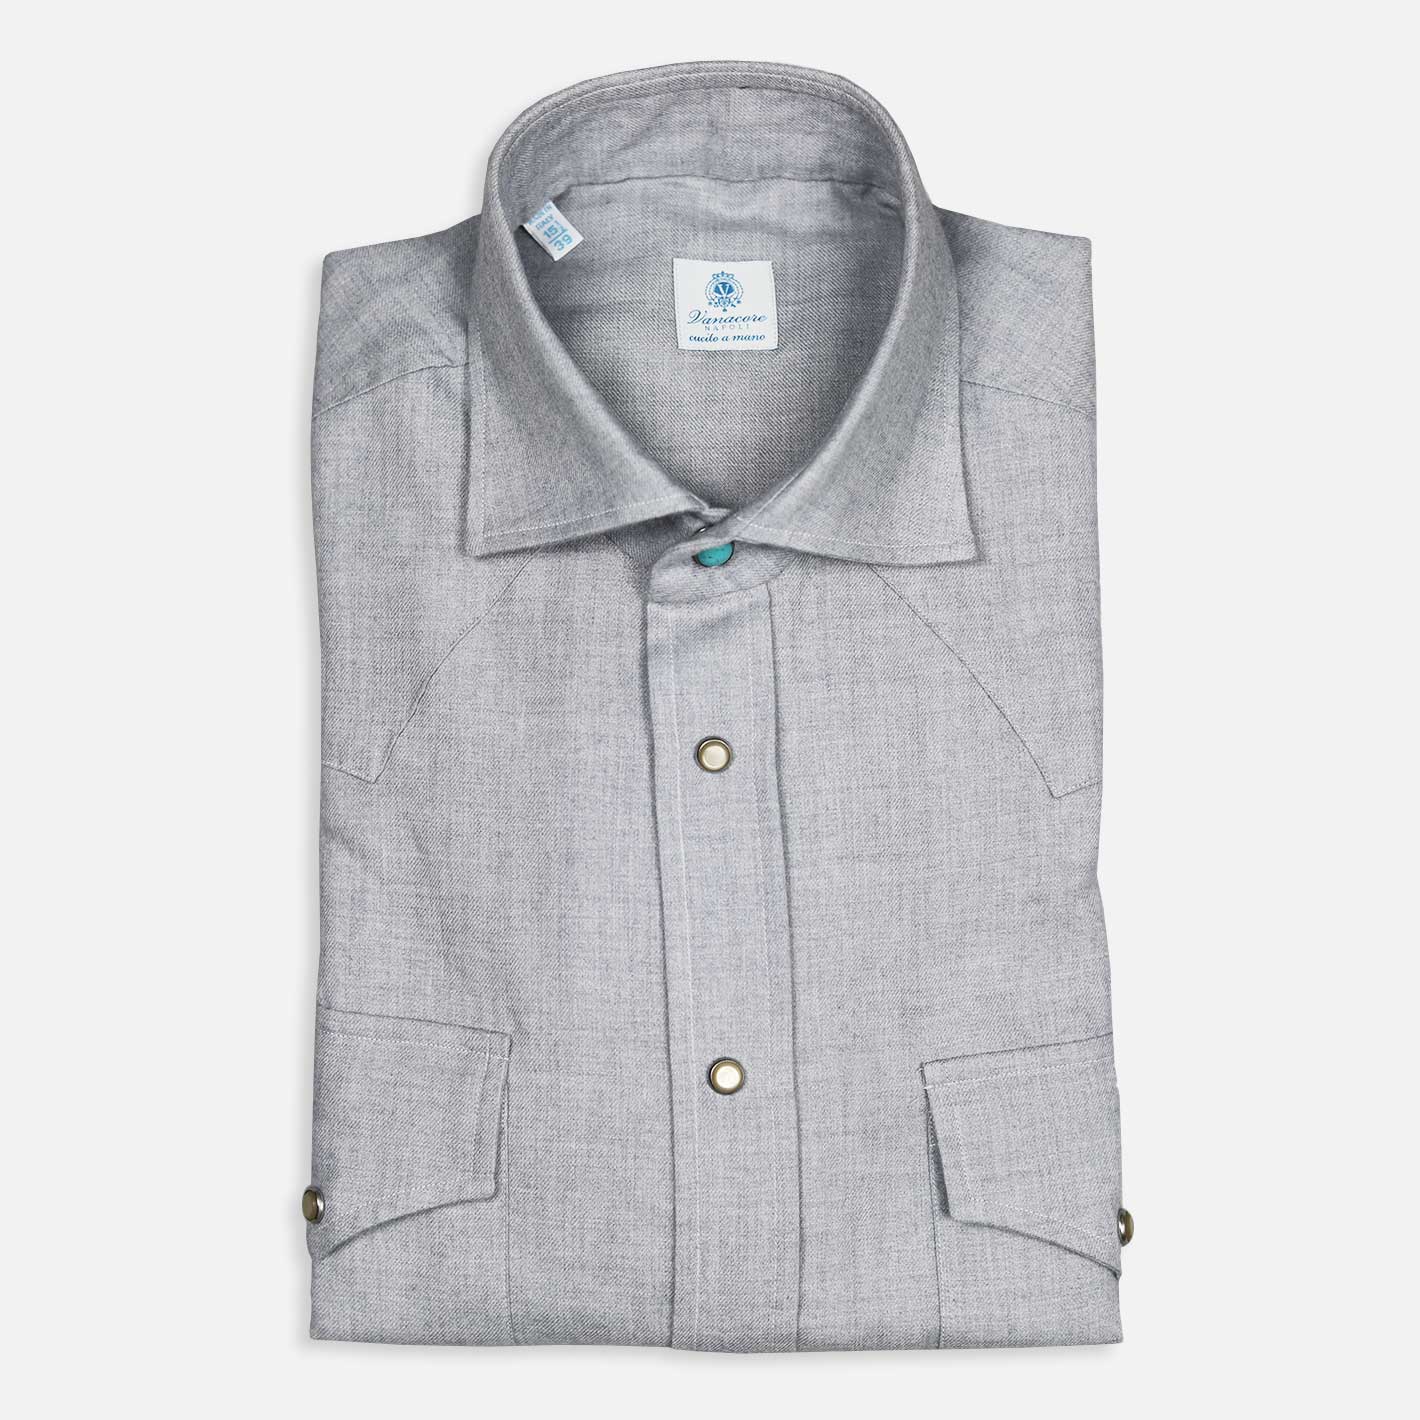 Light grey cotton cashmere rodeo shirt